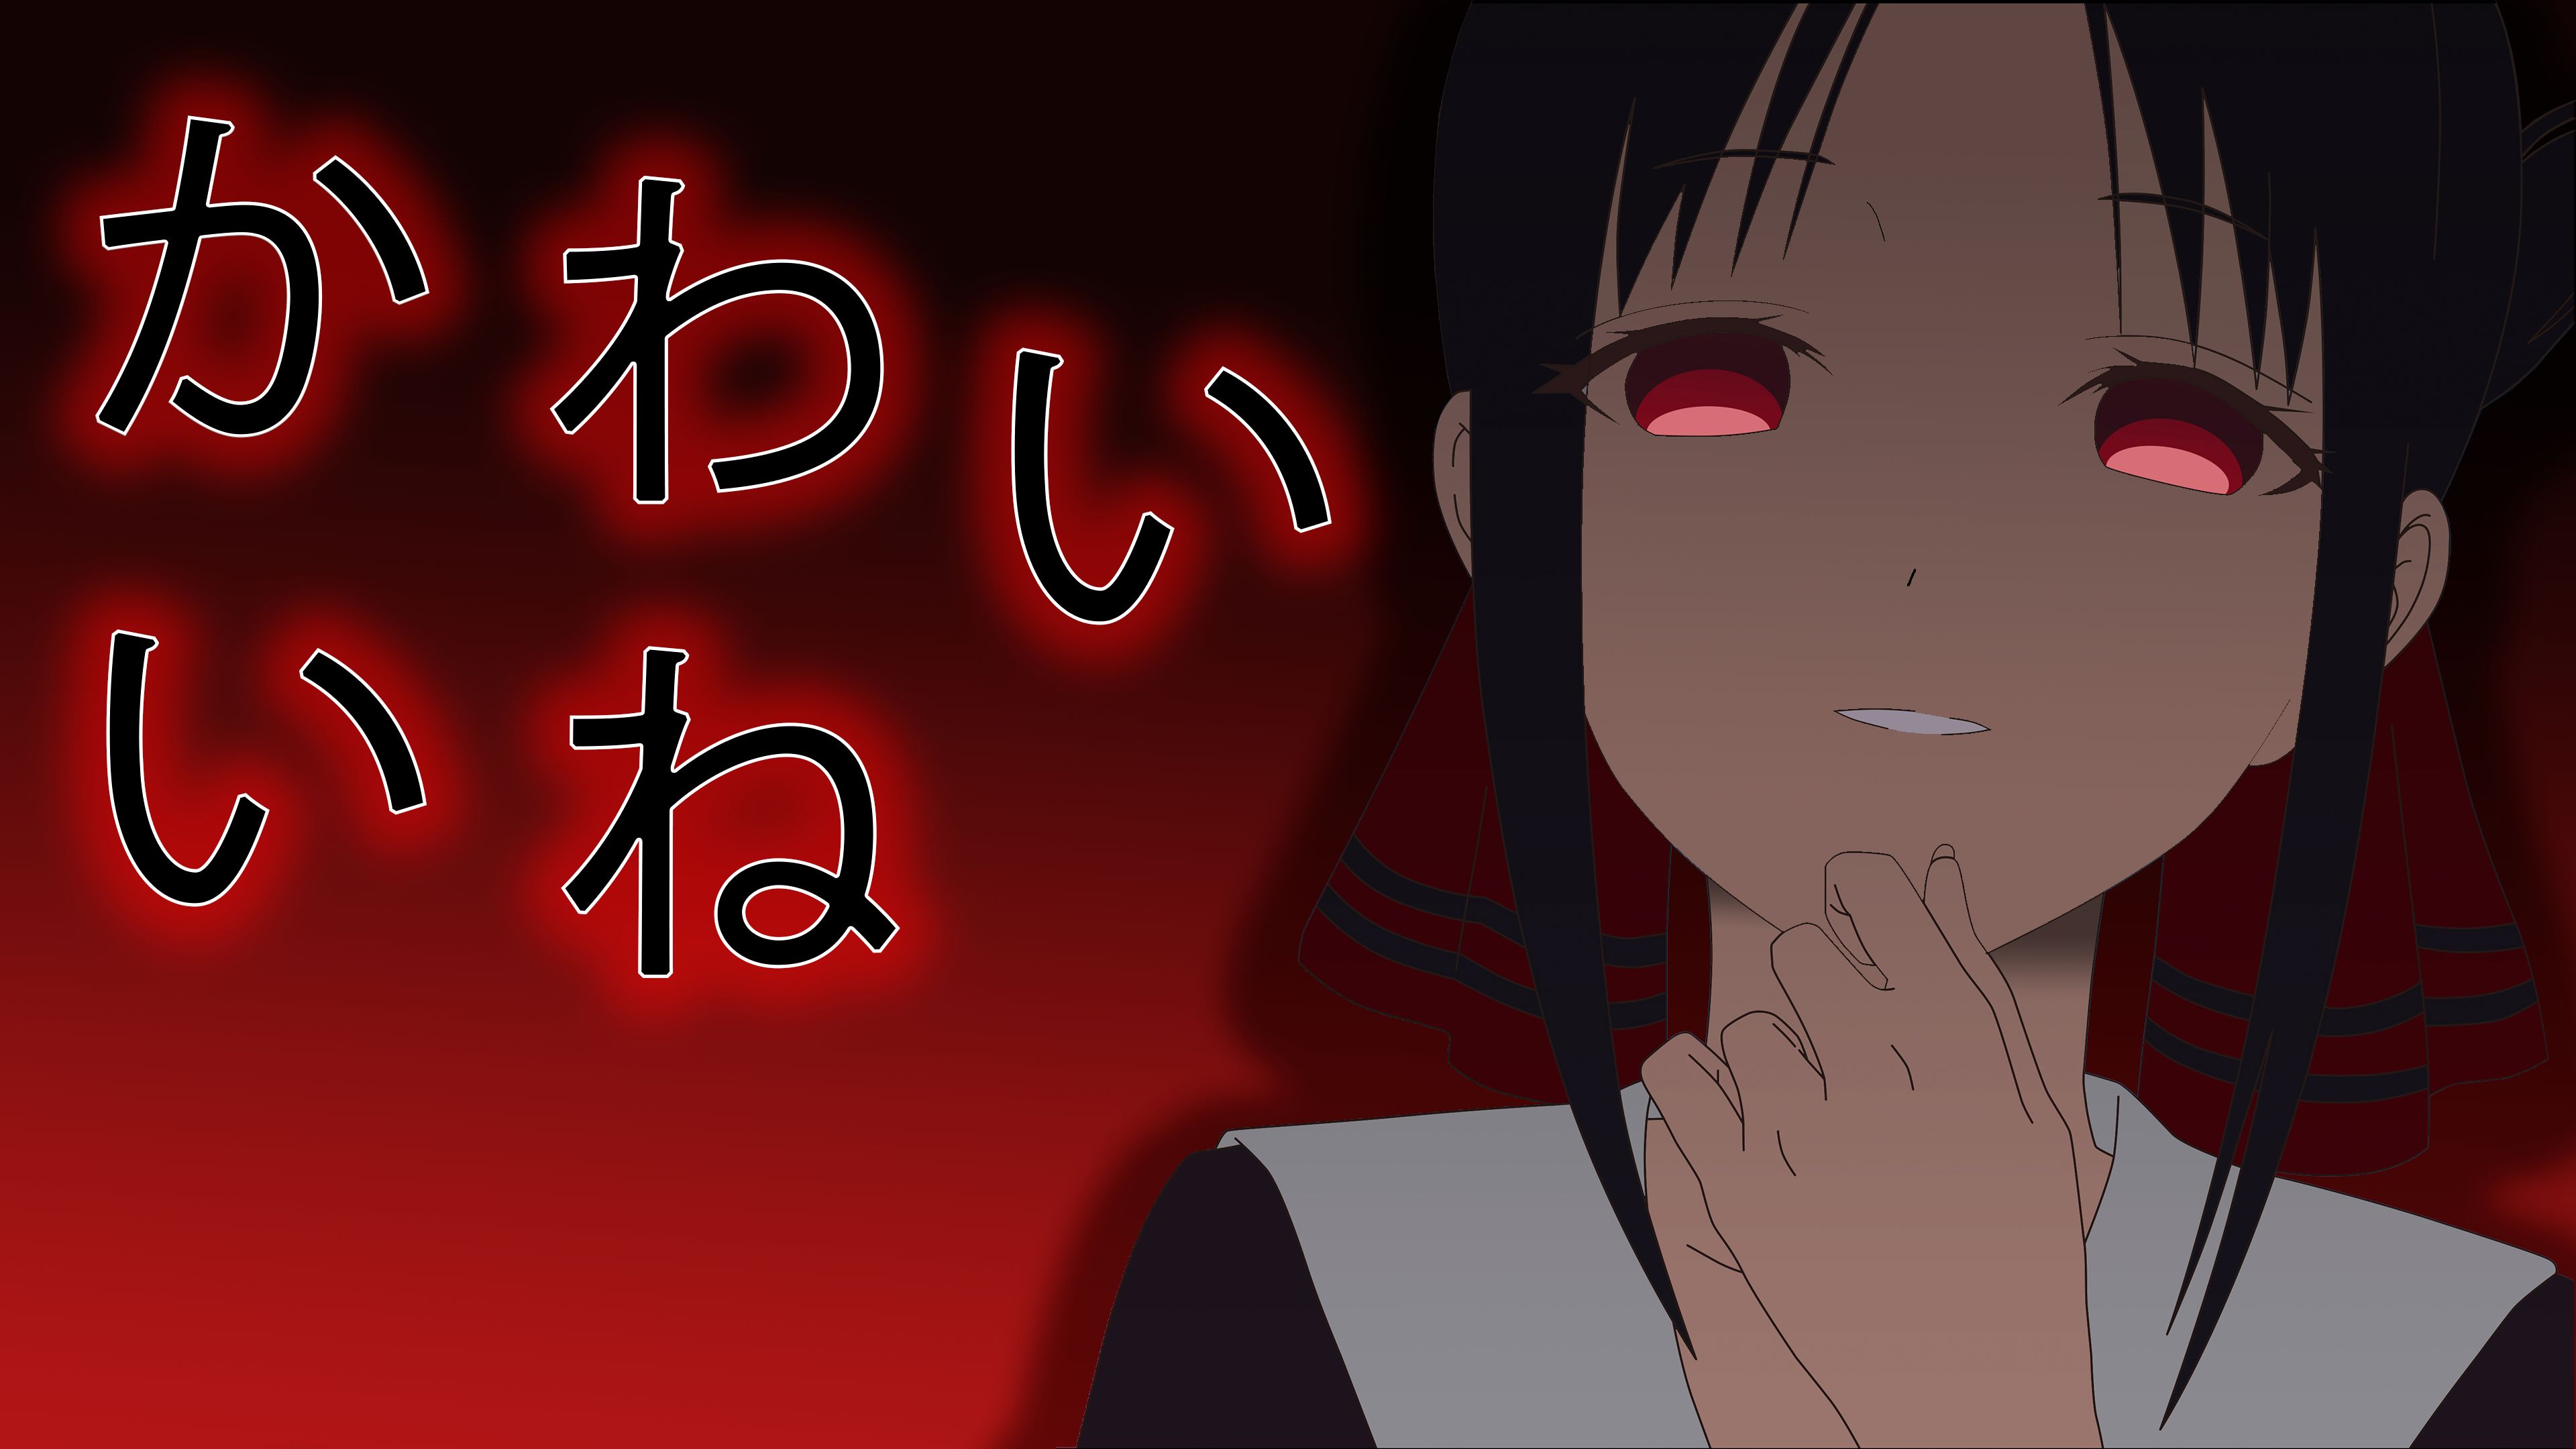 Téléchargez gratuitement l'image Animé, Kaguya Sama: Love Is War, Kaguya Shinomiya sur le bureau de votre PC